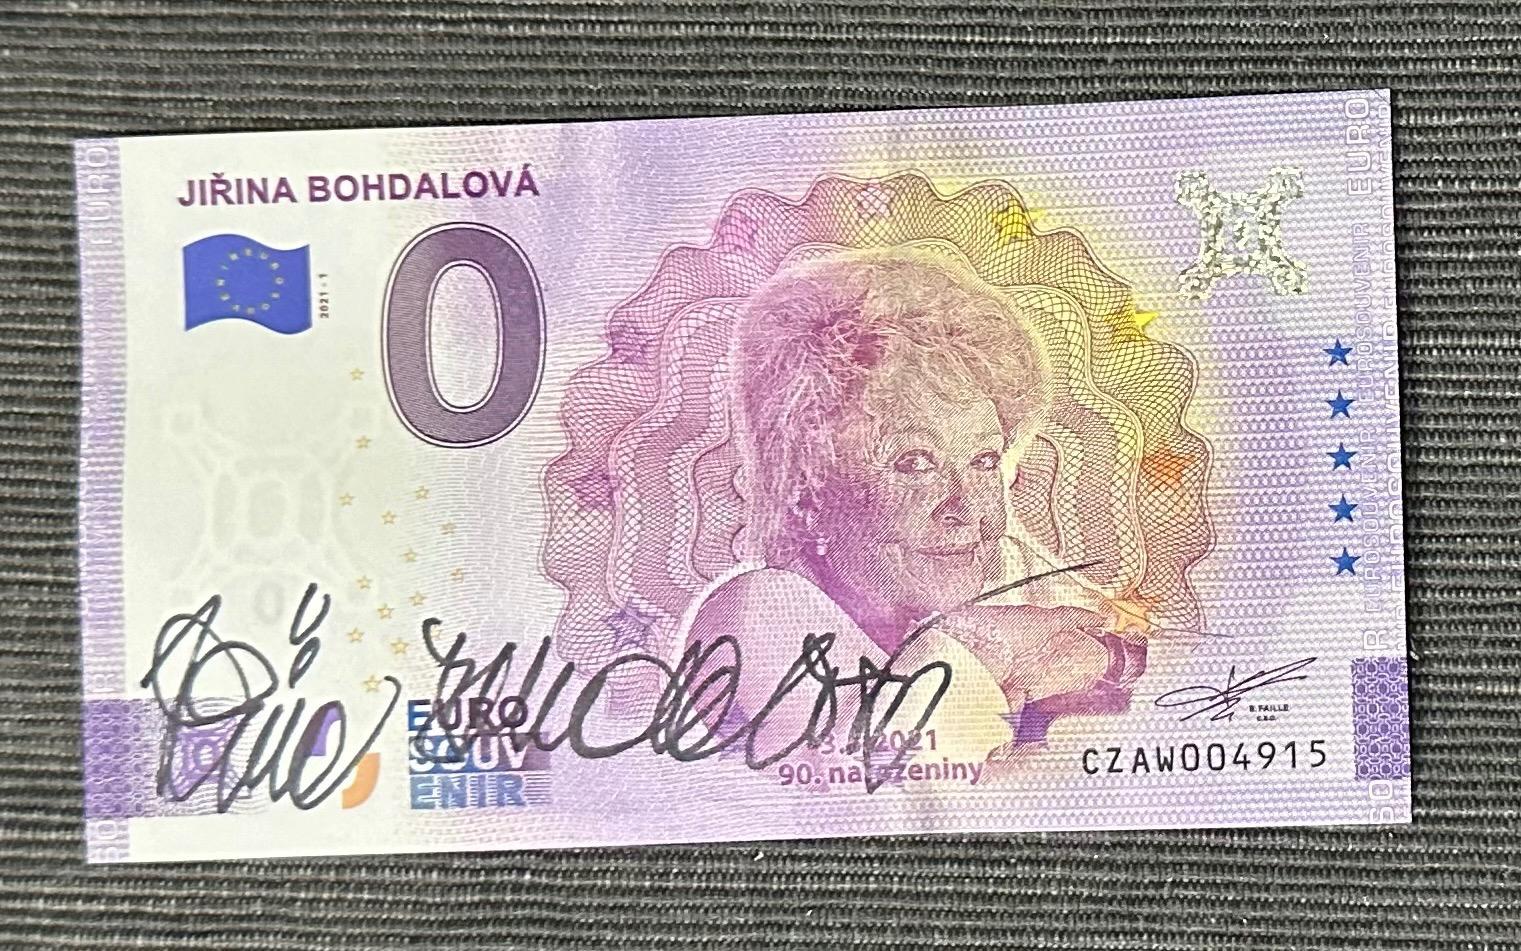 0€ - JIRINA BOHDALOVÁ - s podpisom!!! 🌸 - Zberateľstvo